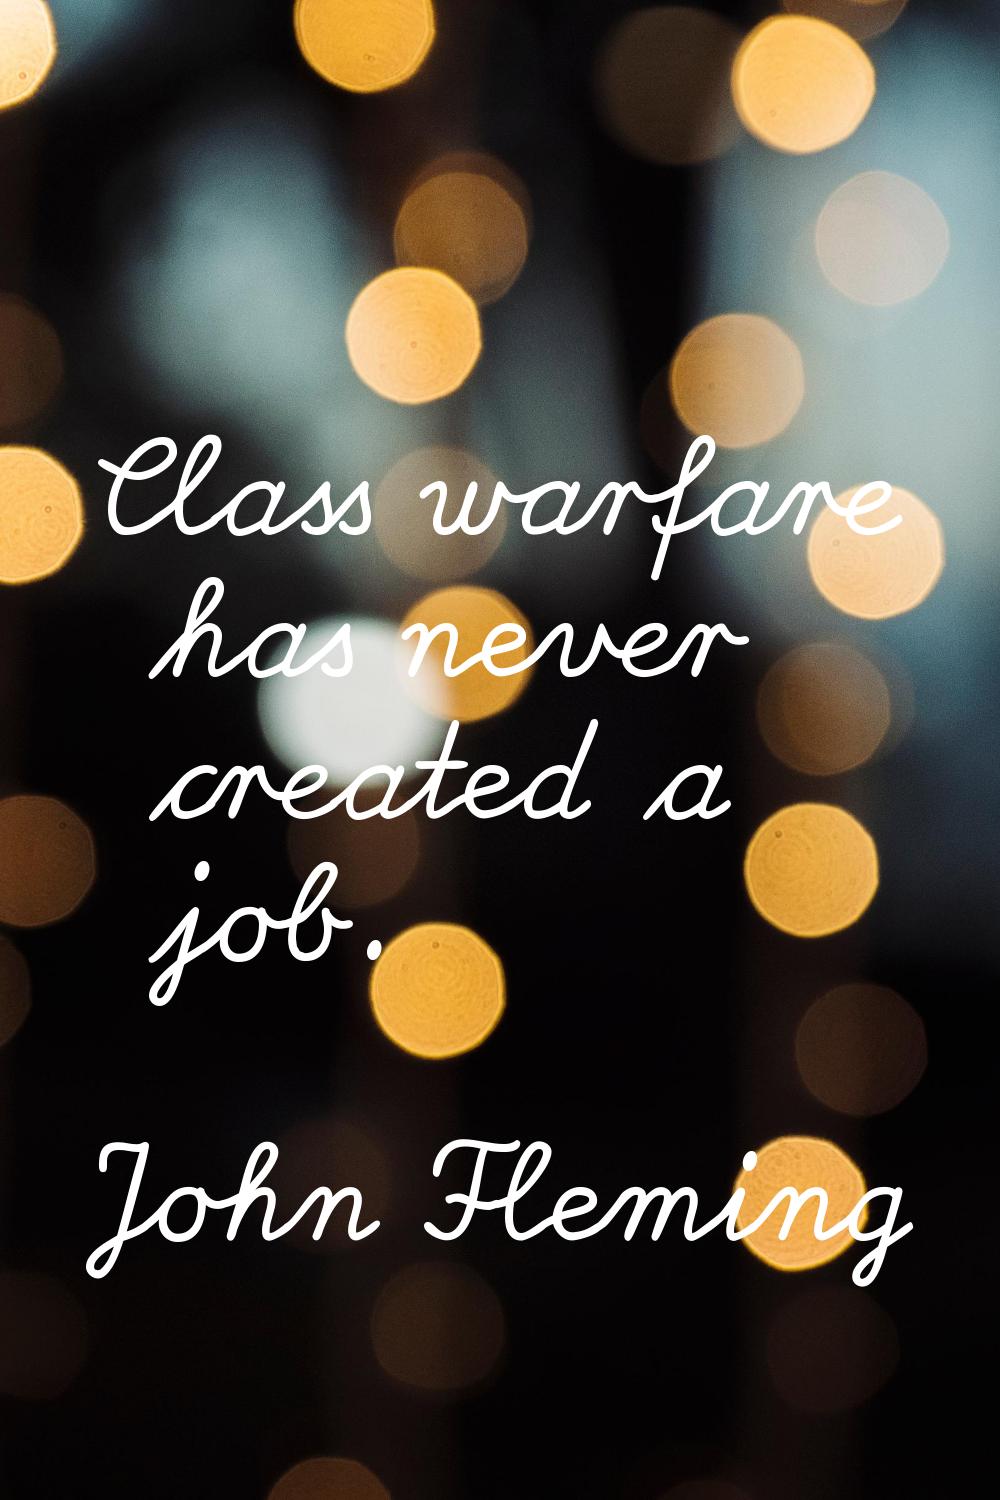 Class warfare has never created a job.